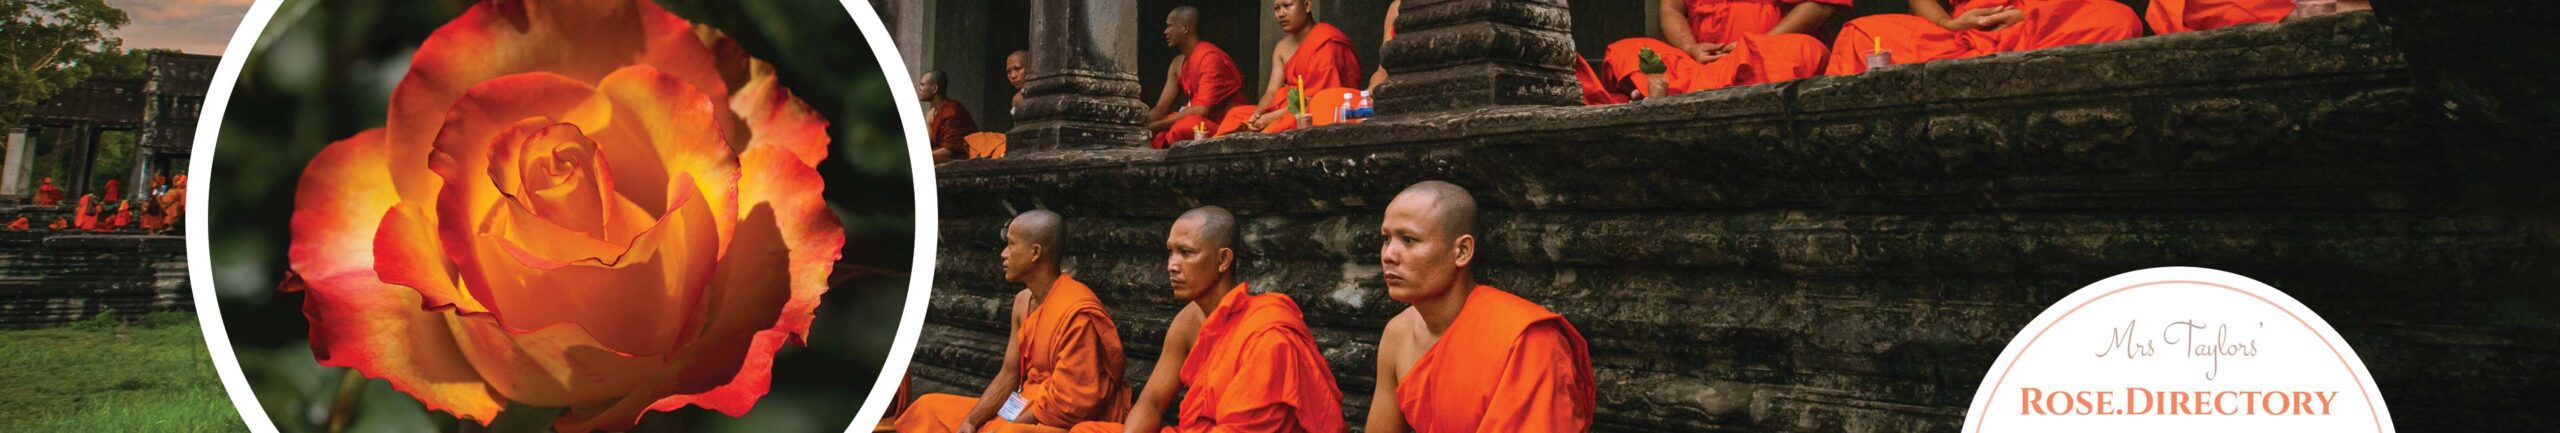 Buddhist monks in orange and an orange rose